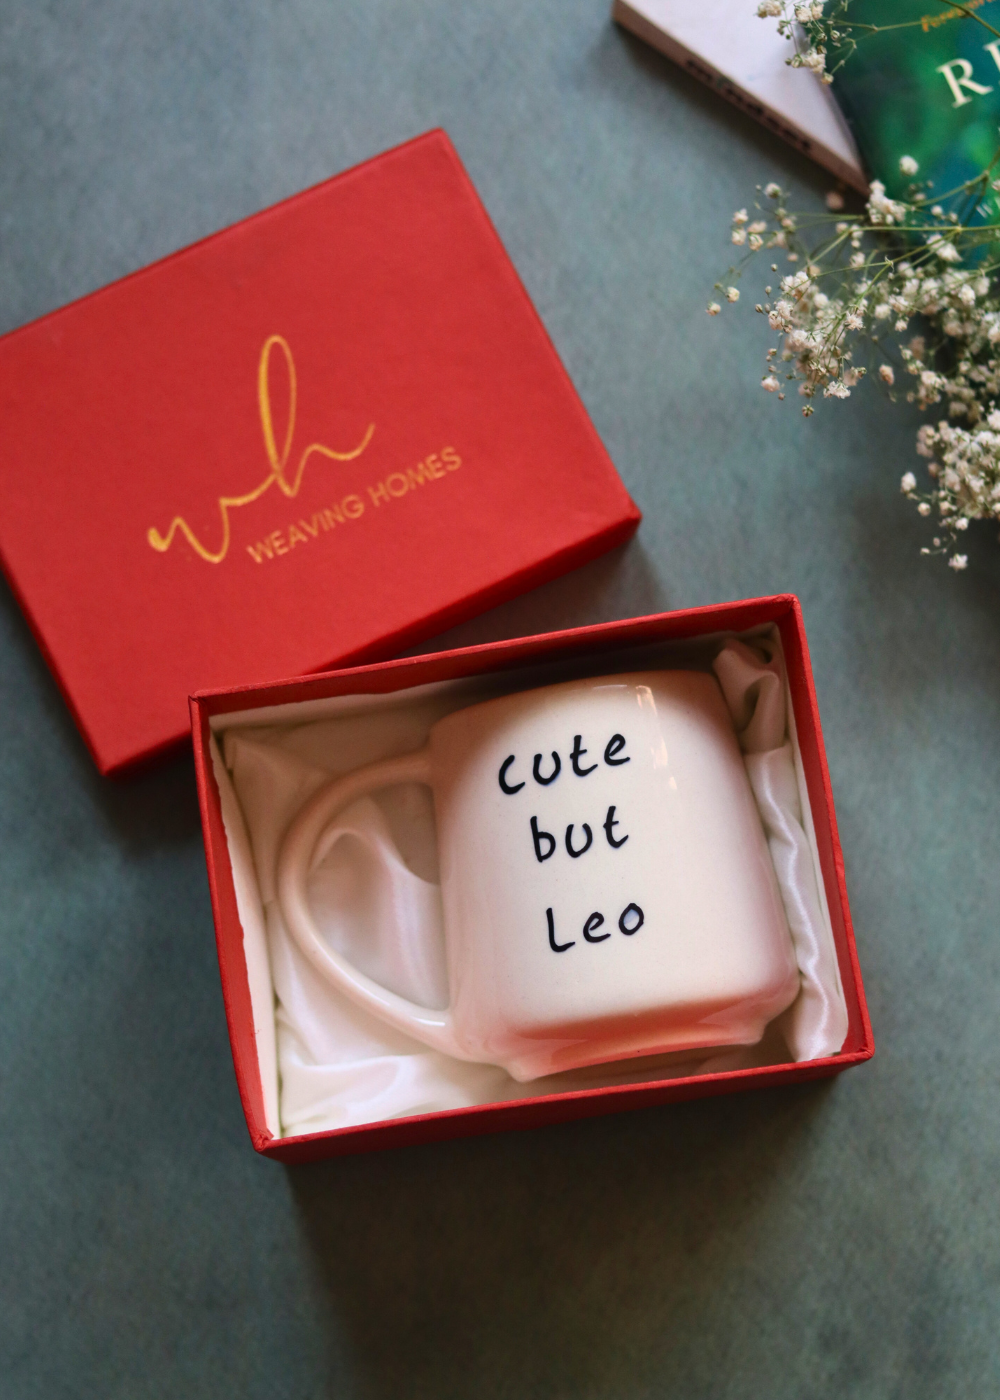 cute but leo mug in a gift box made by ceramic